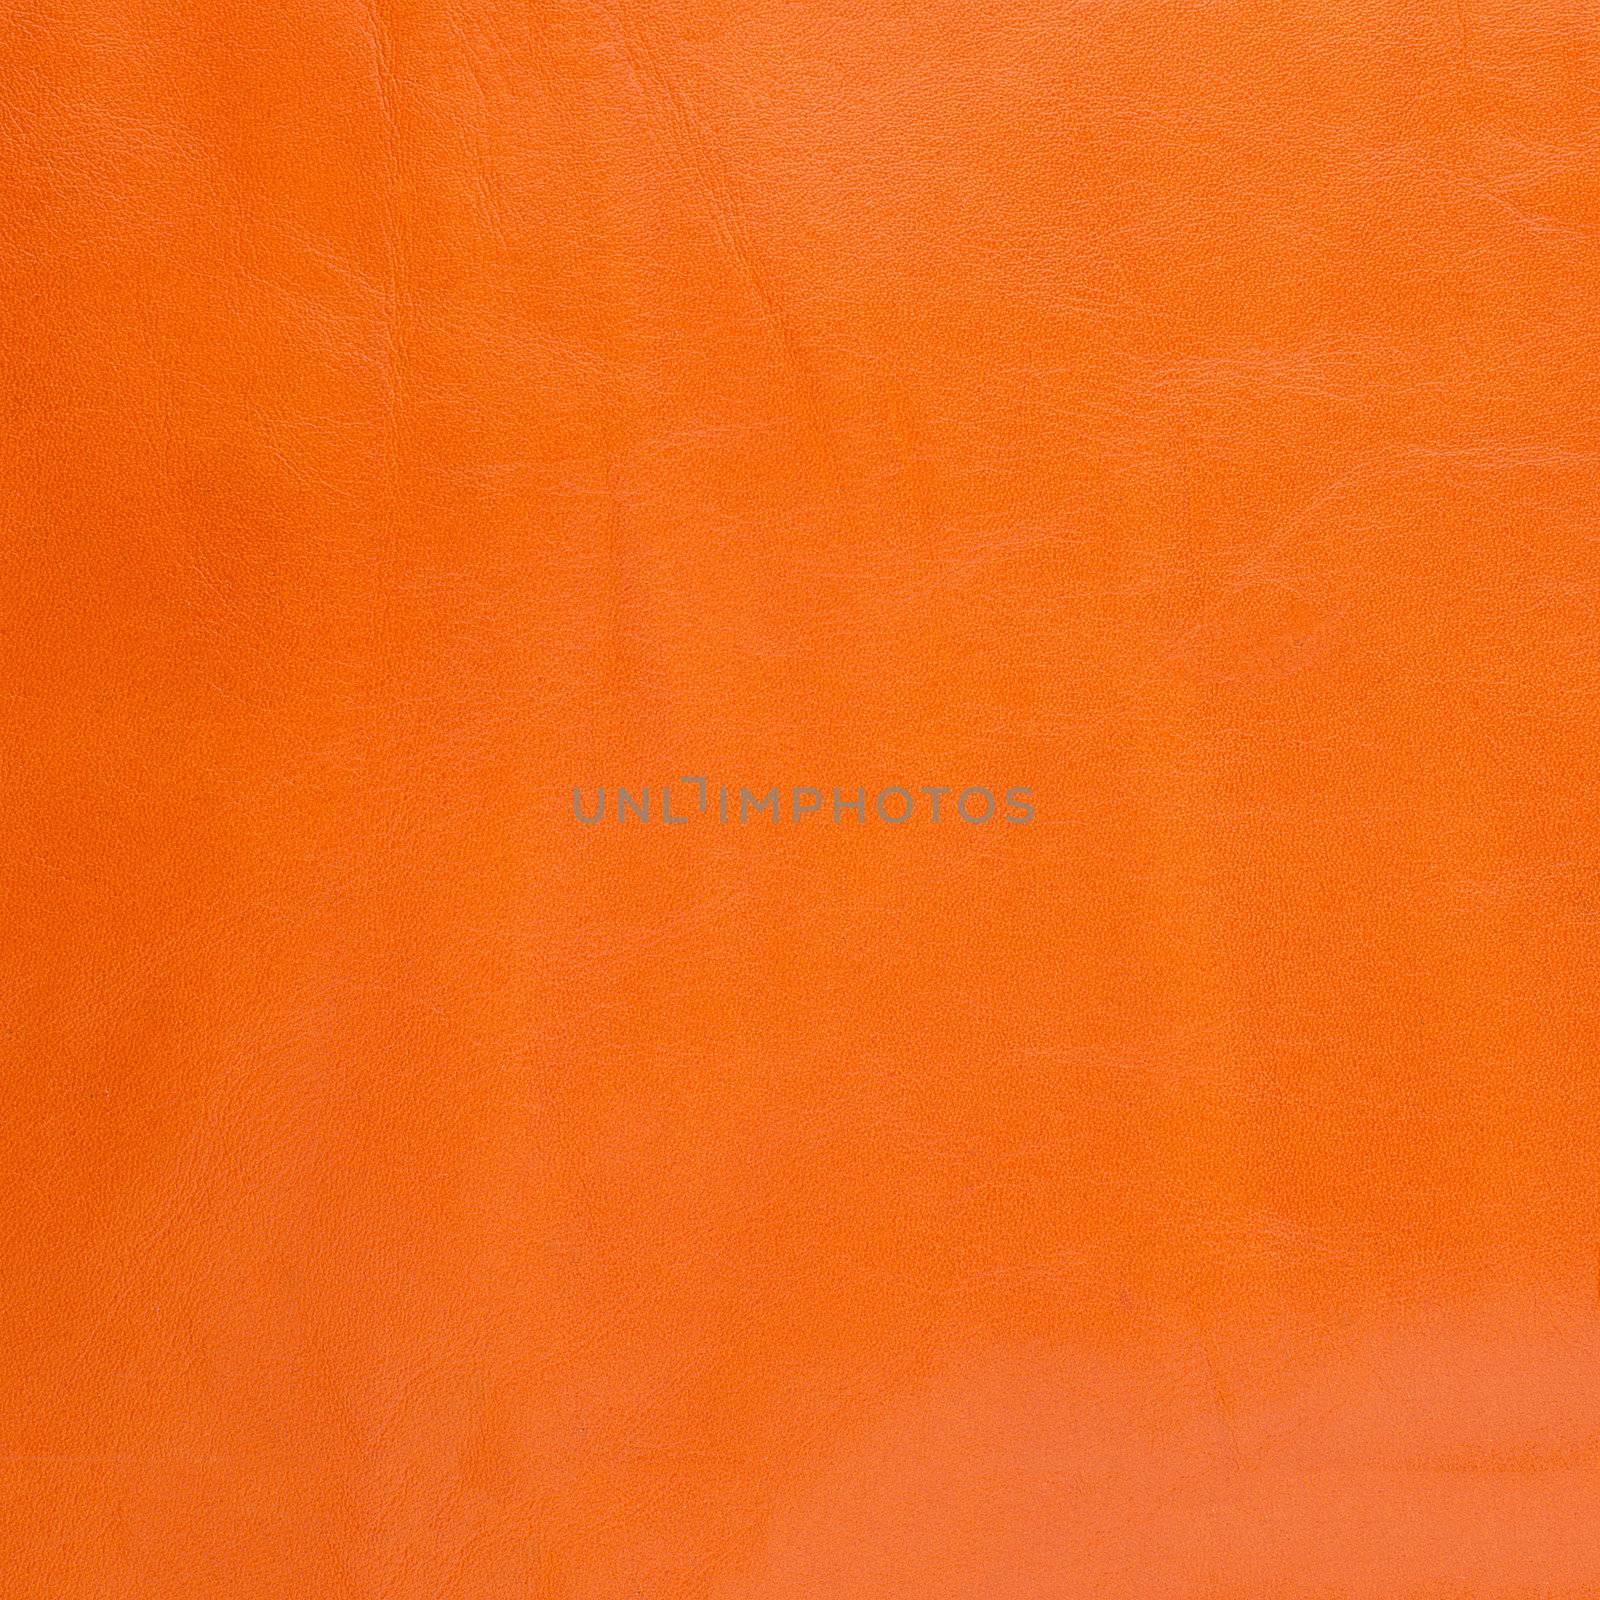 Vivid orange leather background